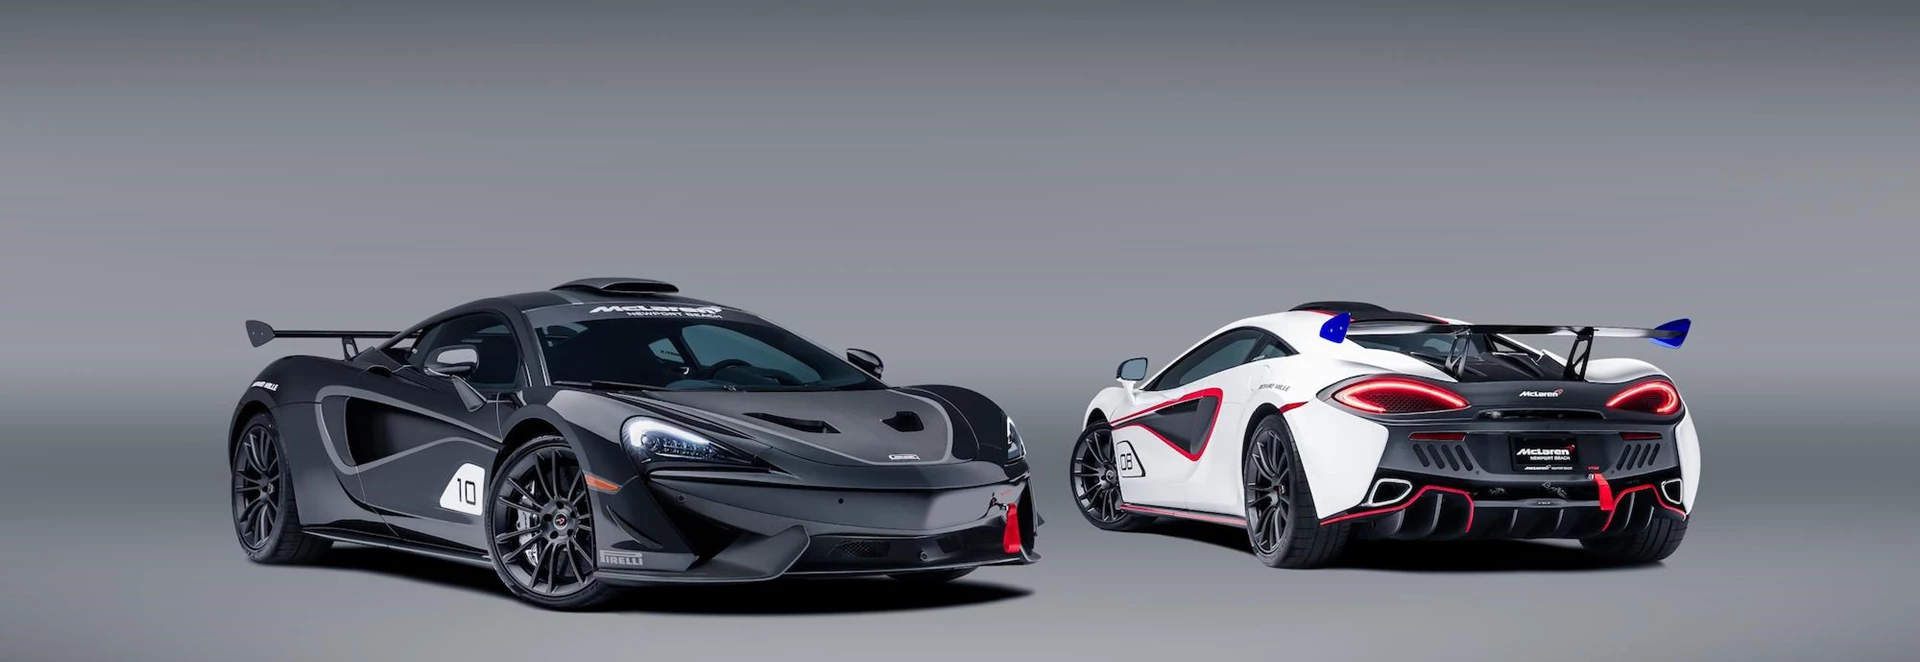 McLaren reveals limited-edition MSO X